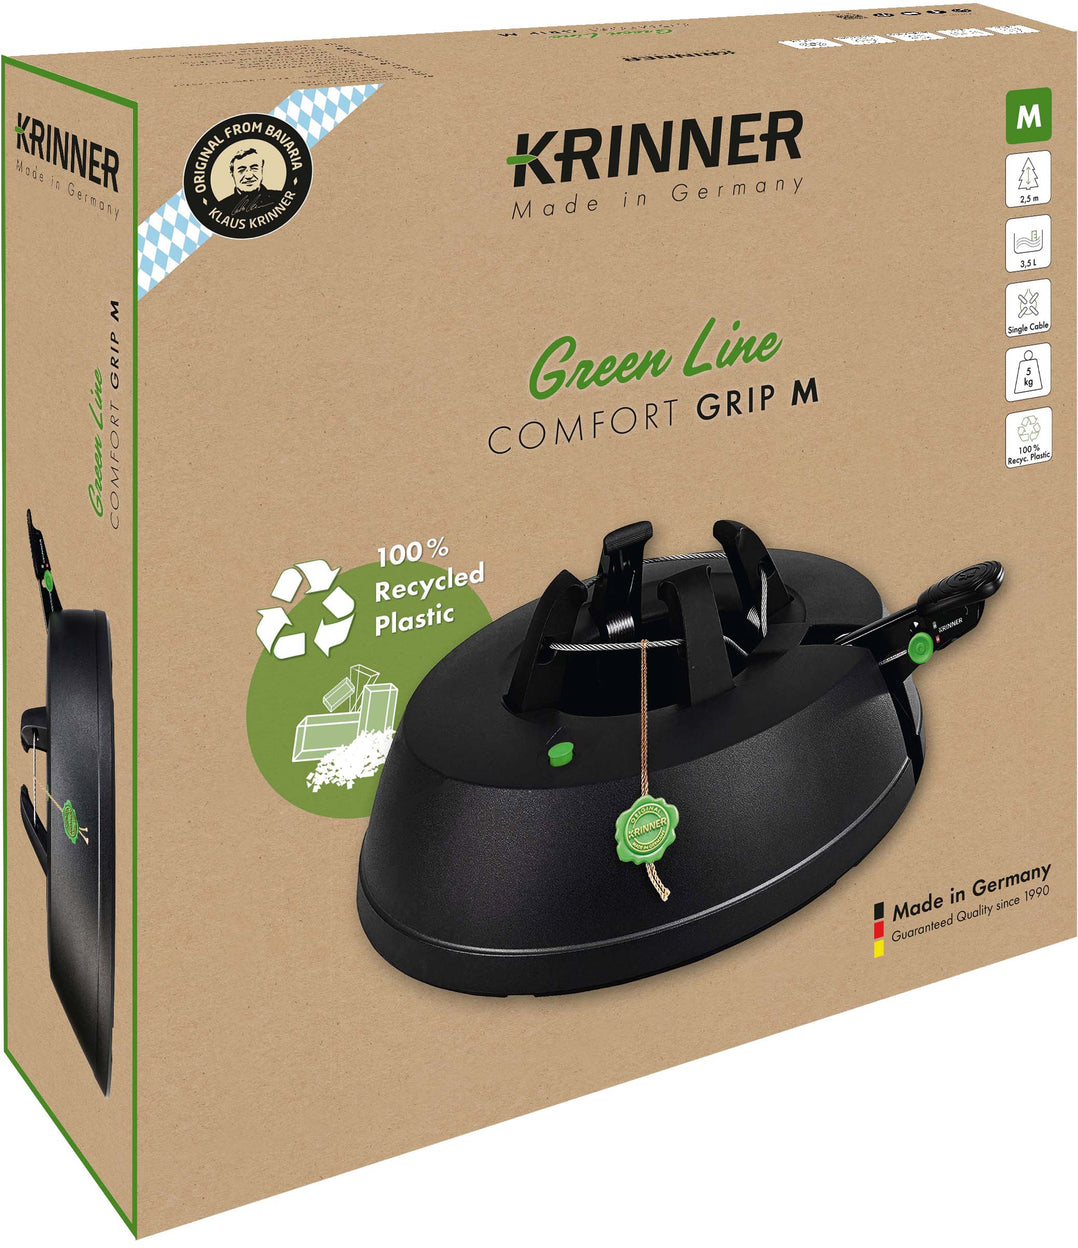 KRINNER Green Line Comfort Grip M